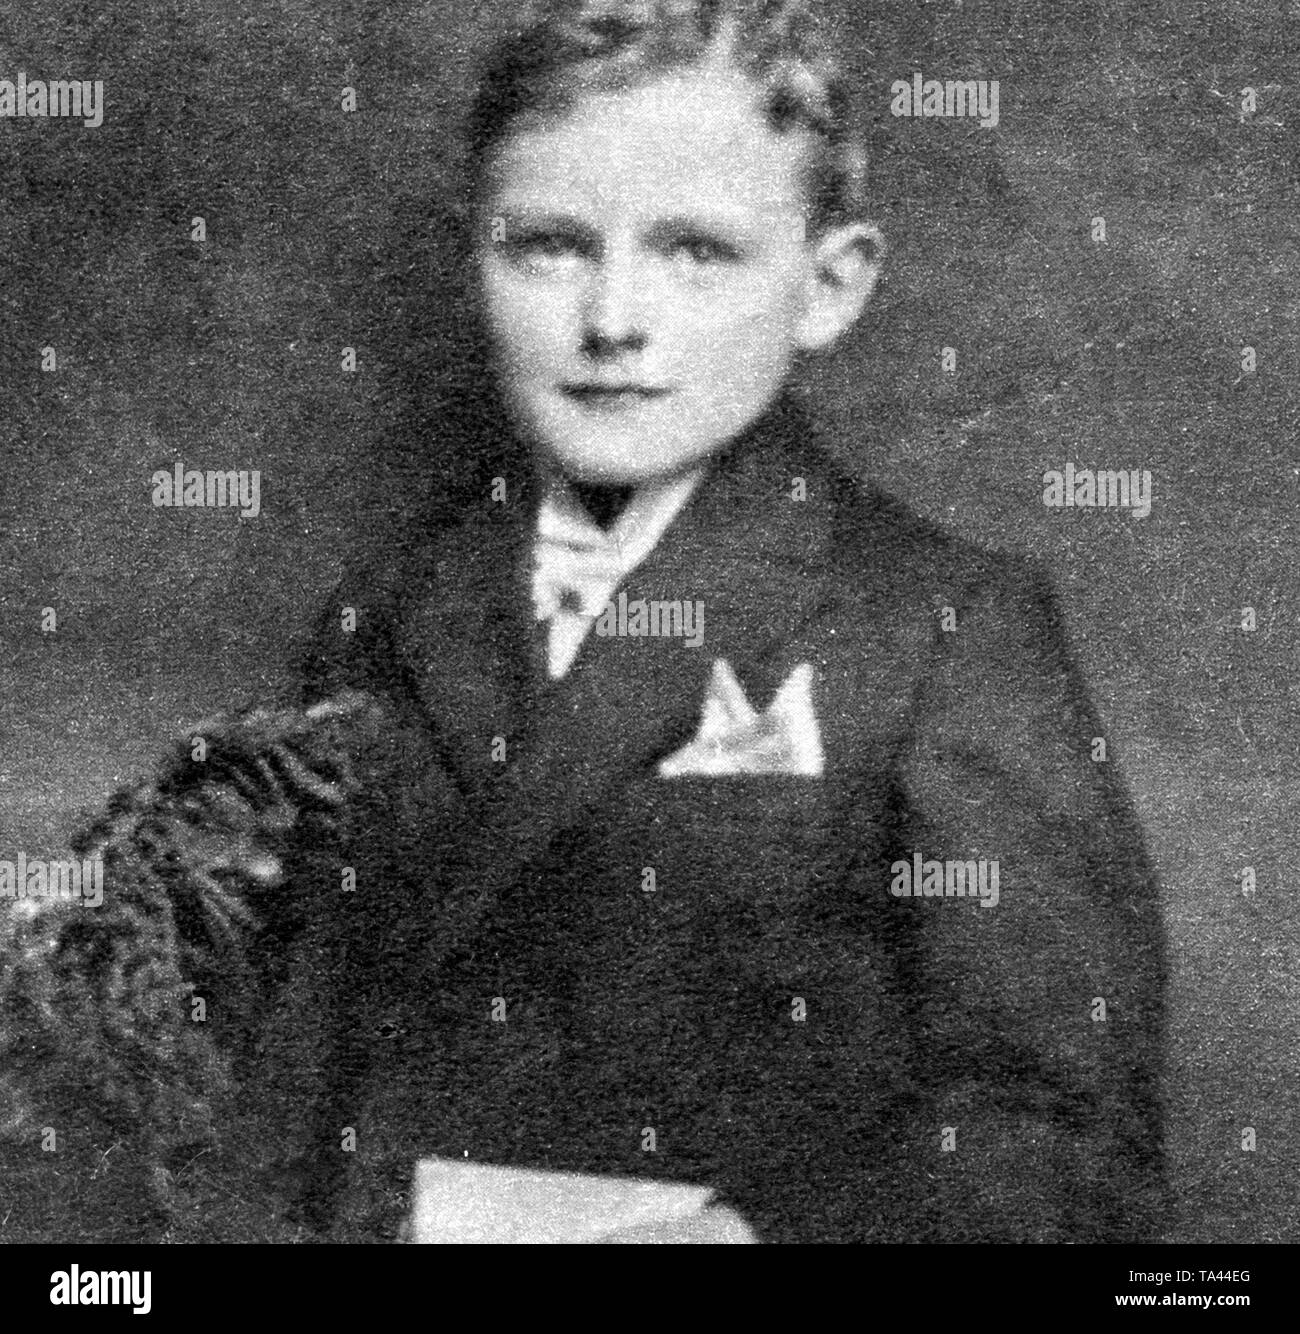 Franz Josef Strauss as a student. Stock Photo